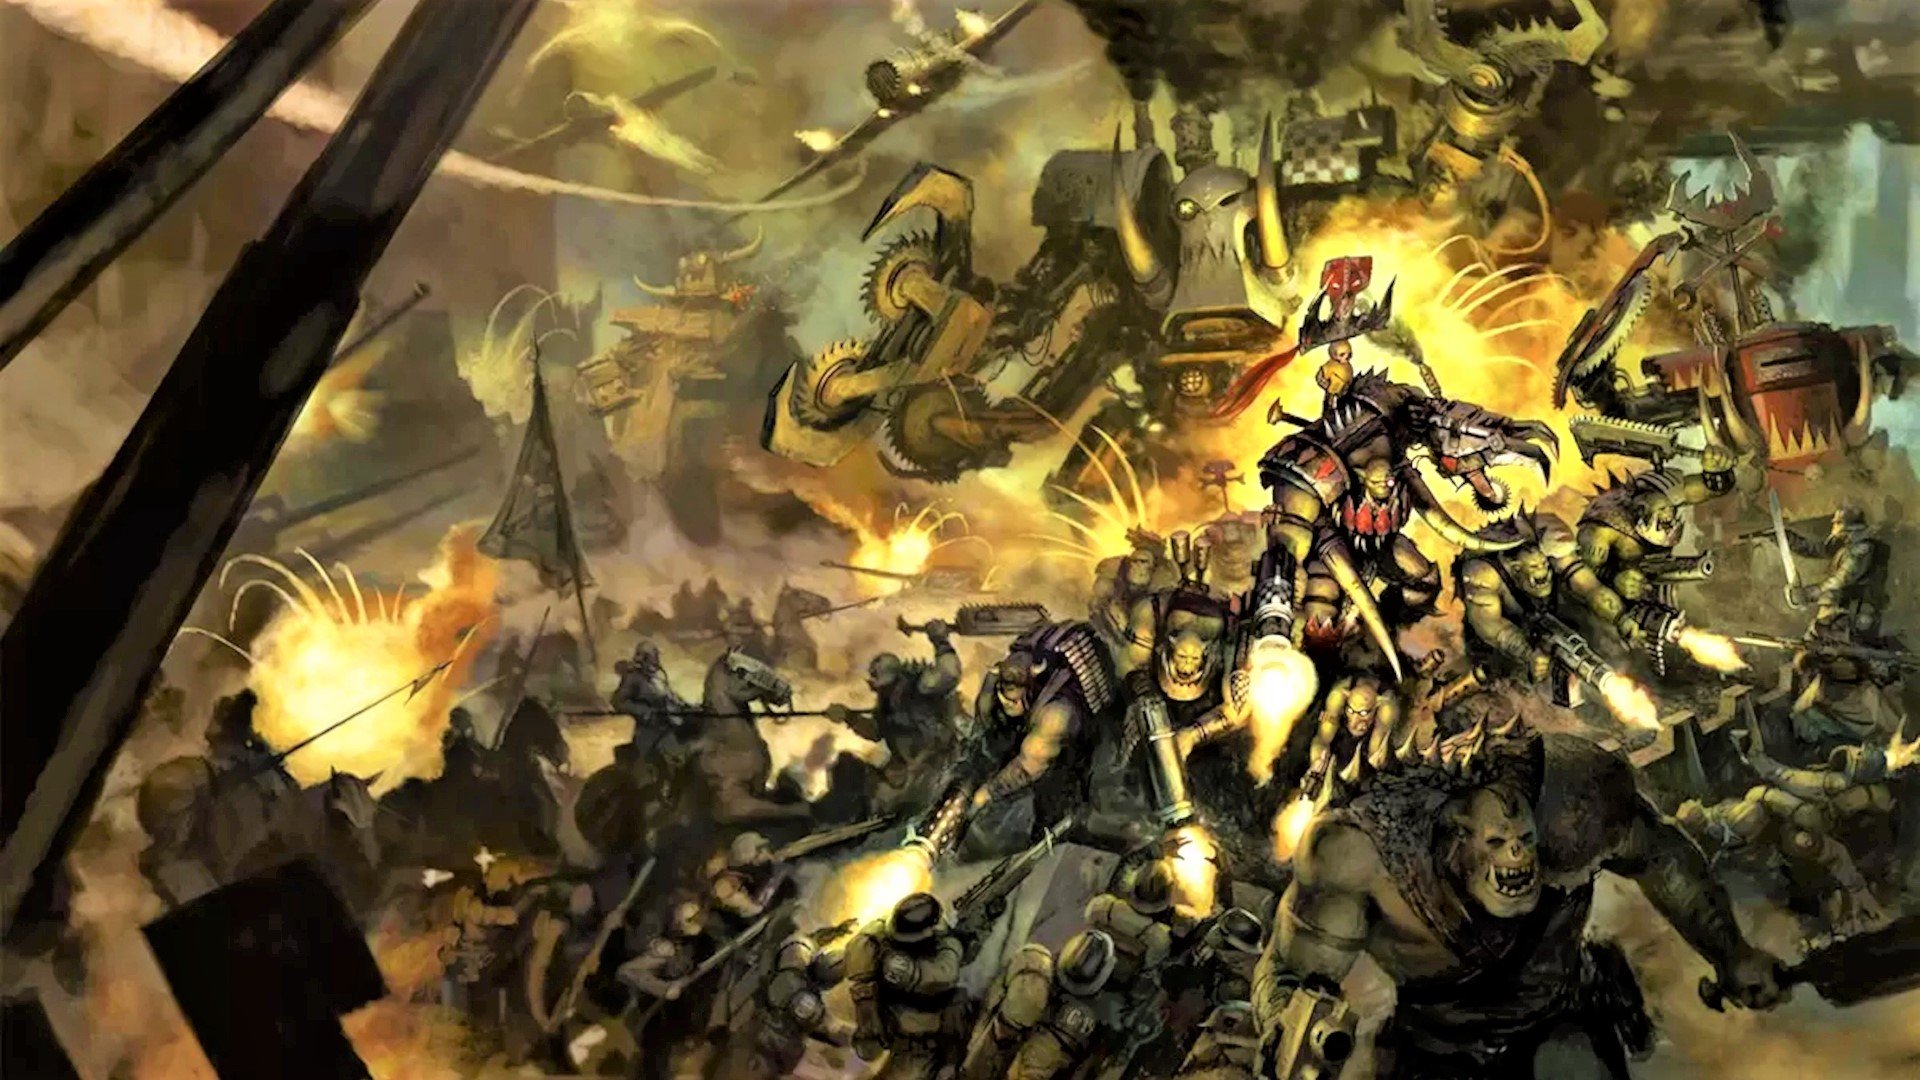 Warhammer 40k orks army guide - Warhammer Community artwork showing a huge Ork Waaagh! led by Ghazghkull Thraka